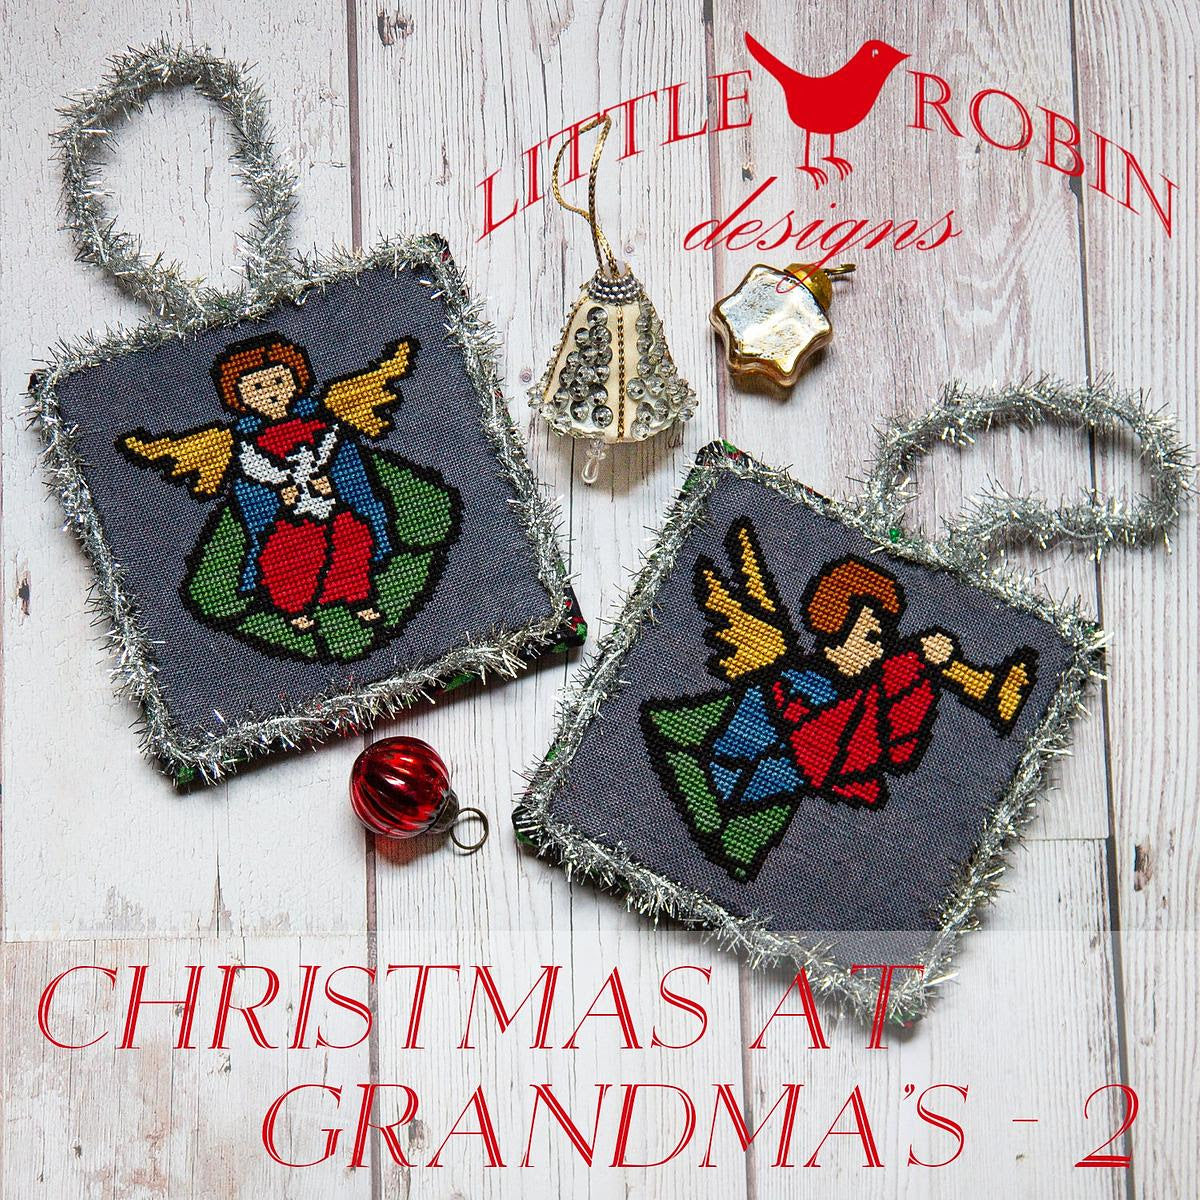 Christmas at Grandma's - 2 - Little Robin Designs - Cross Stitch Pattern, Needlecraft Patterns, The Crafty Grimalkin - A Cross Stitch Store